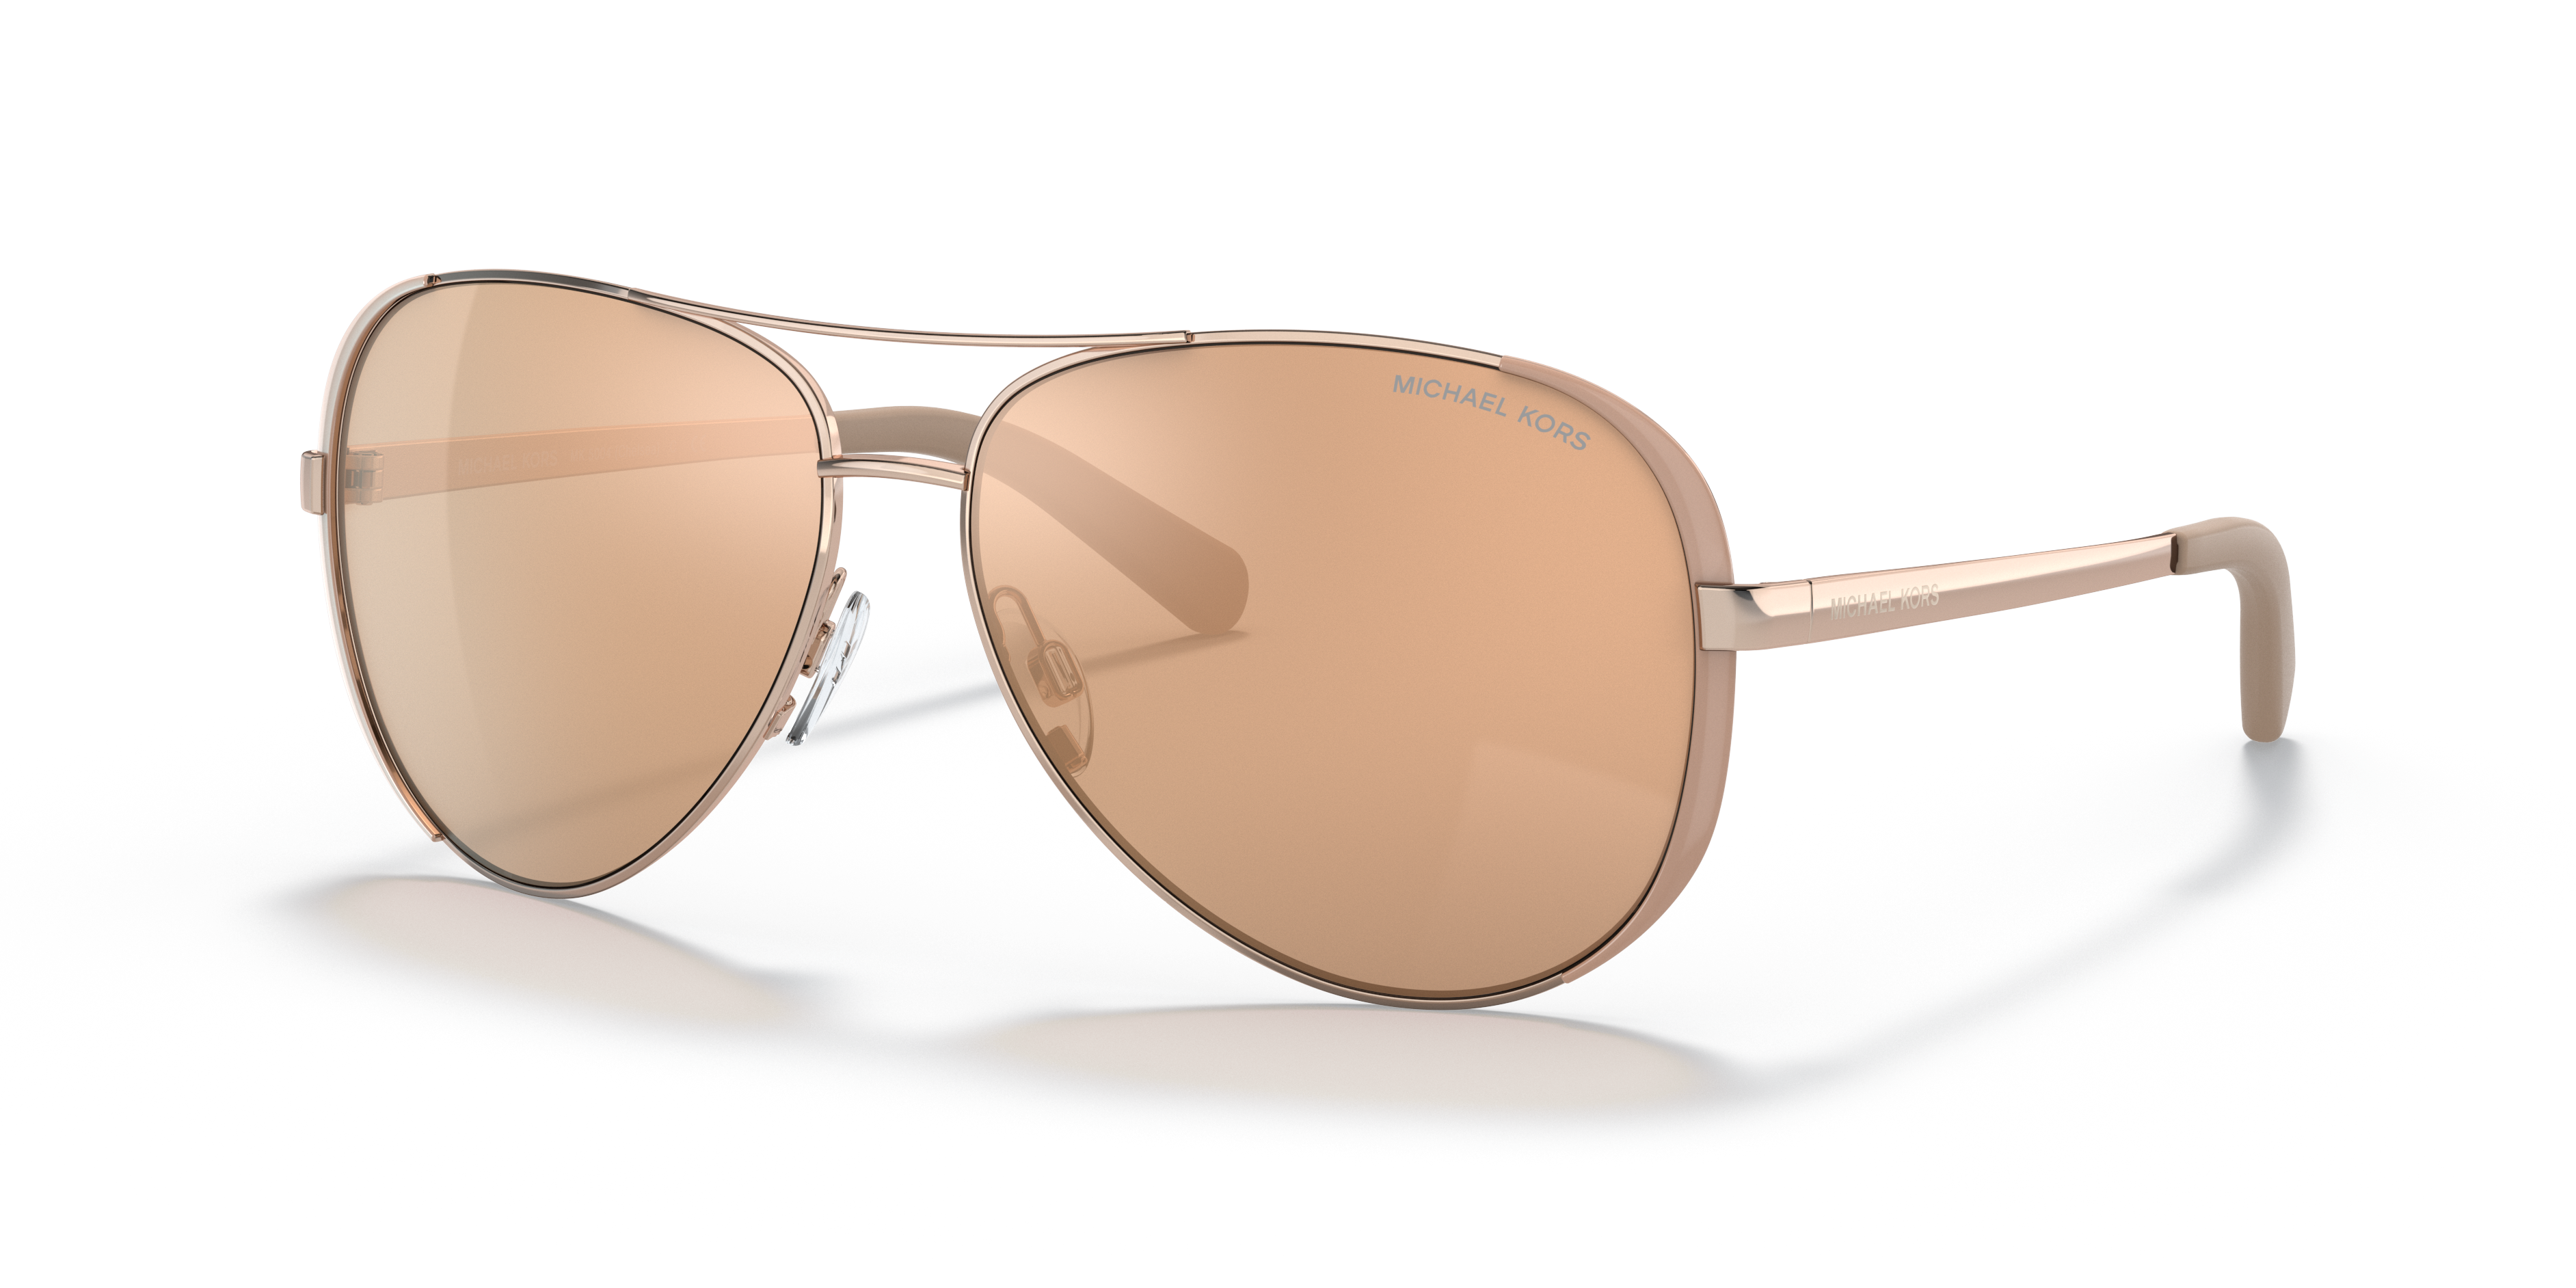 Michael Kors Optic White Sunglasses  Glassescom  Free Shipping